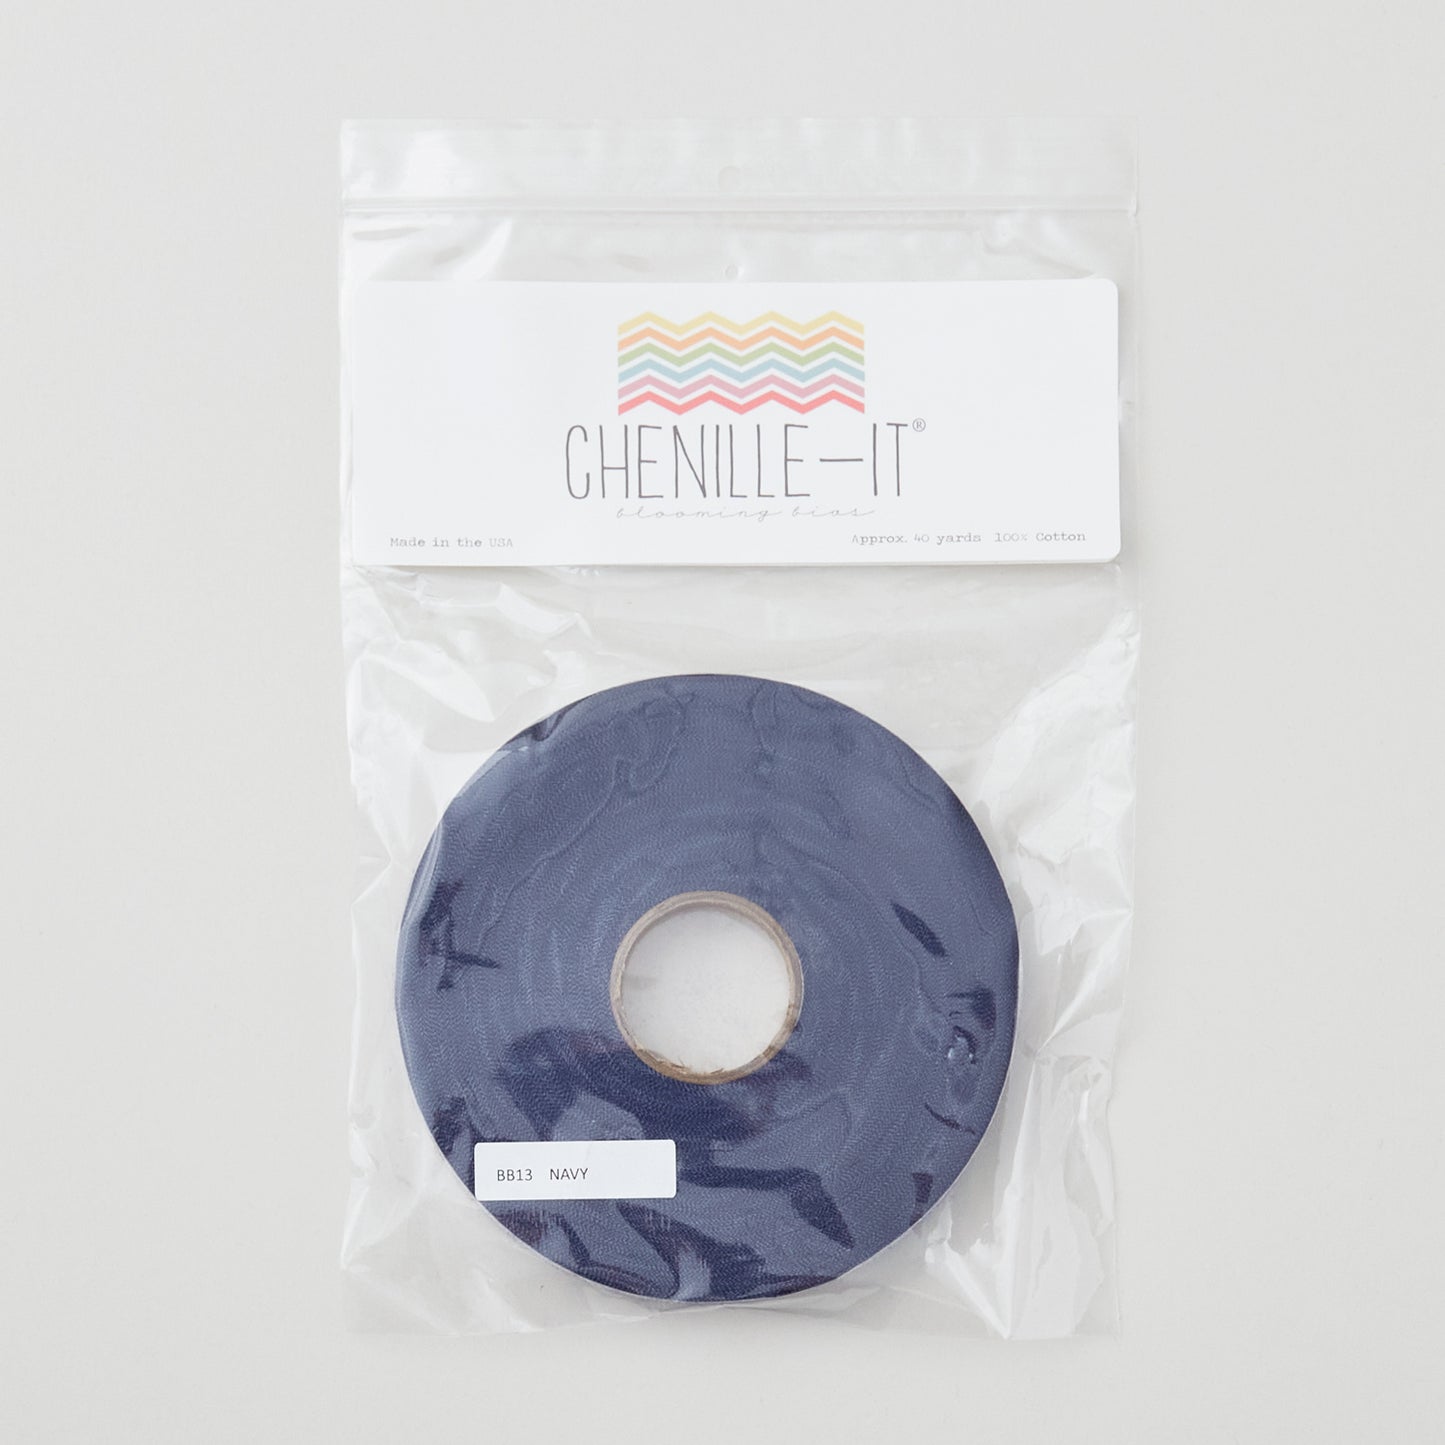 Chenille-It Blooming Bias Sew & Wash Trim - 5/8" Navy Alternative View #1